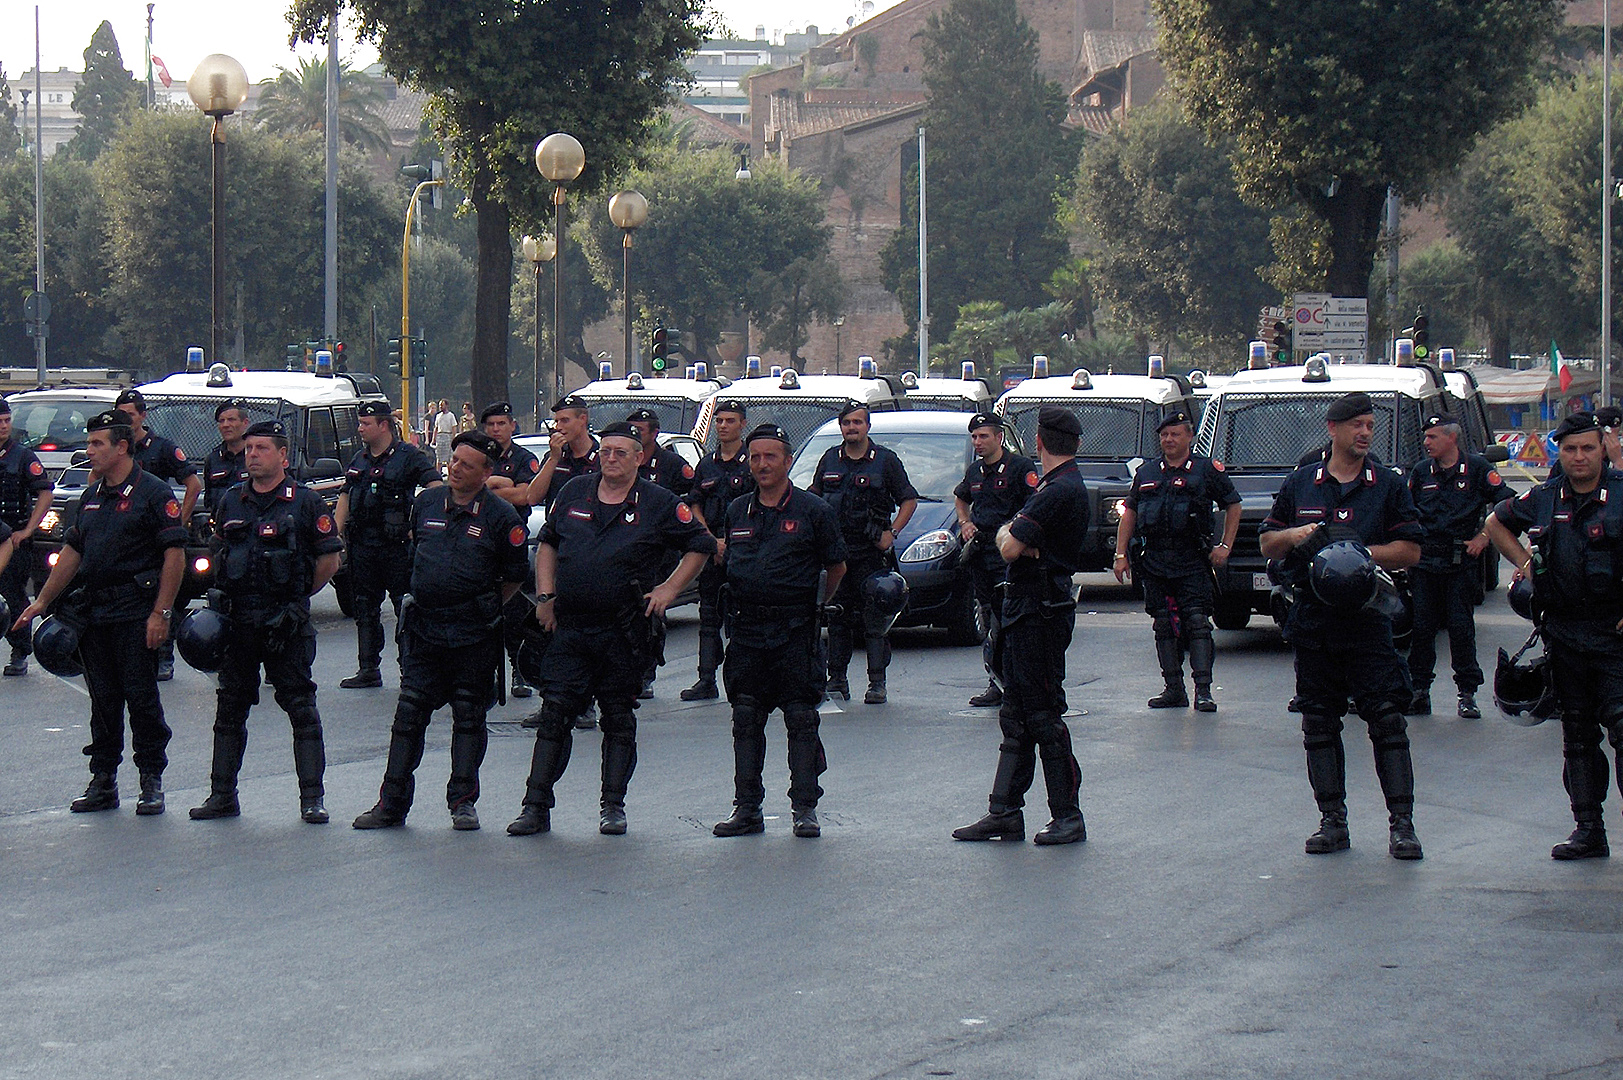 Divisione Unit Mobili Carabinieri (Rome), Divisione Unit Mobili Carabinieri